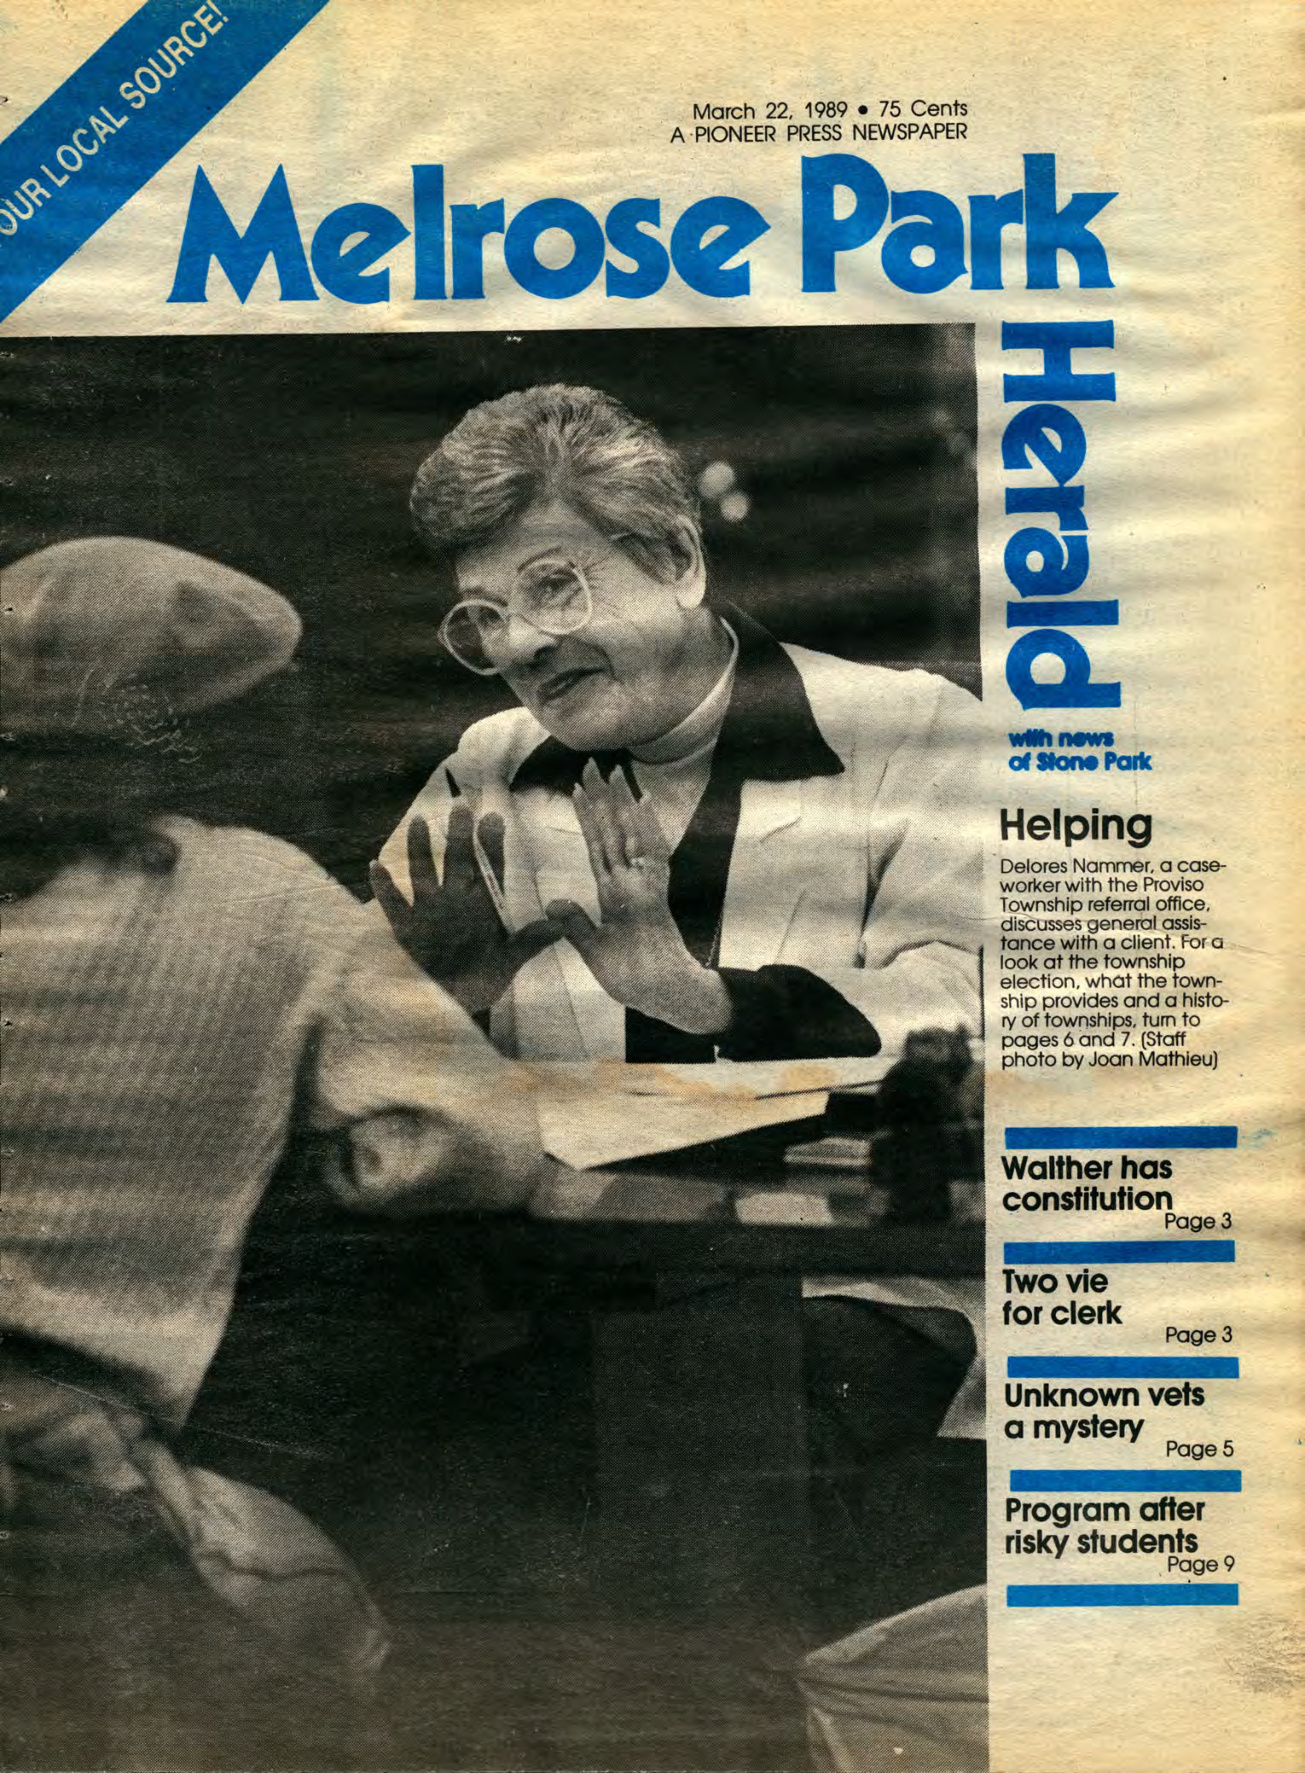 The Herald – 19890322